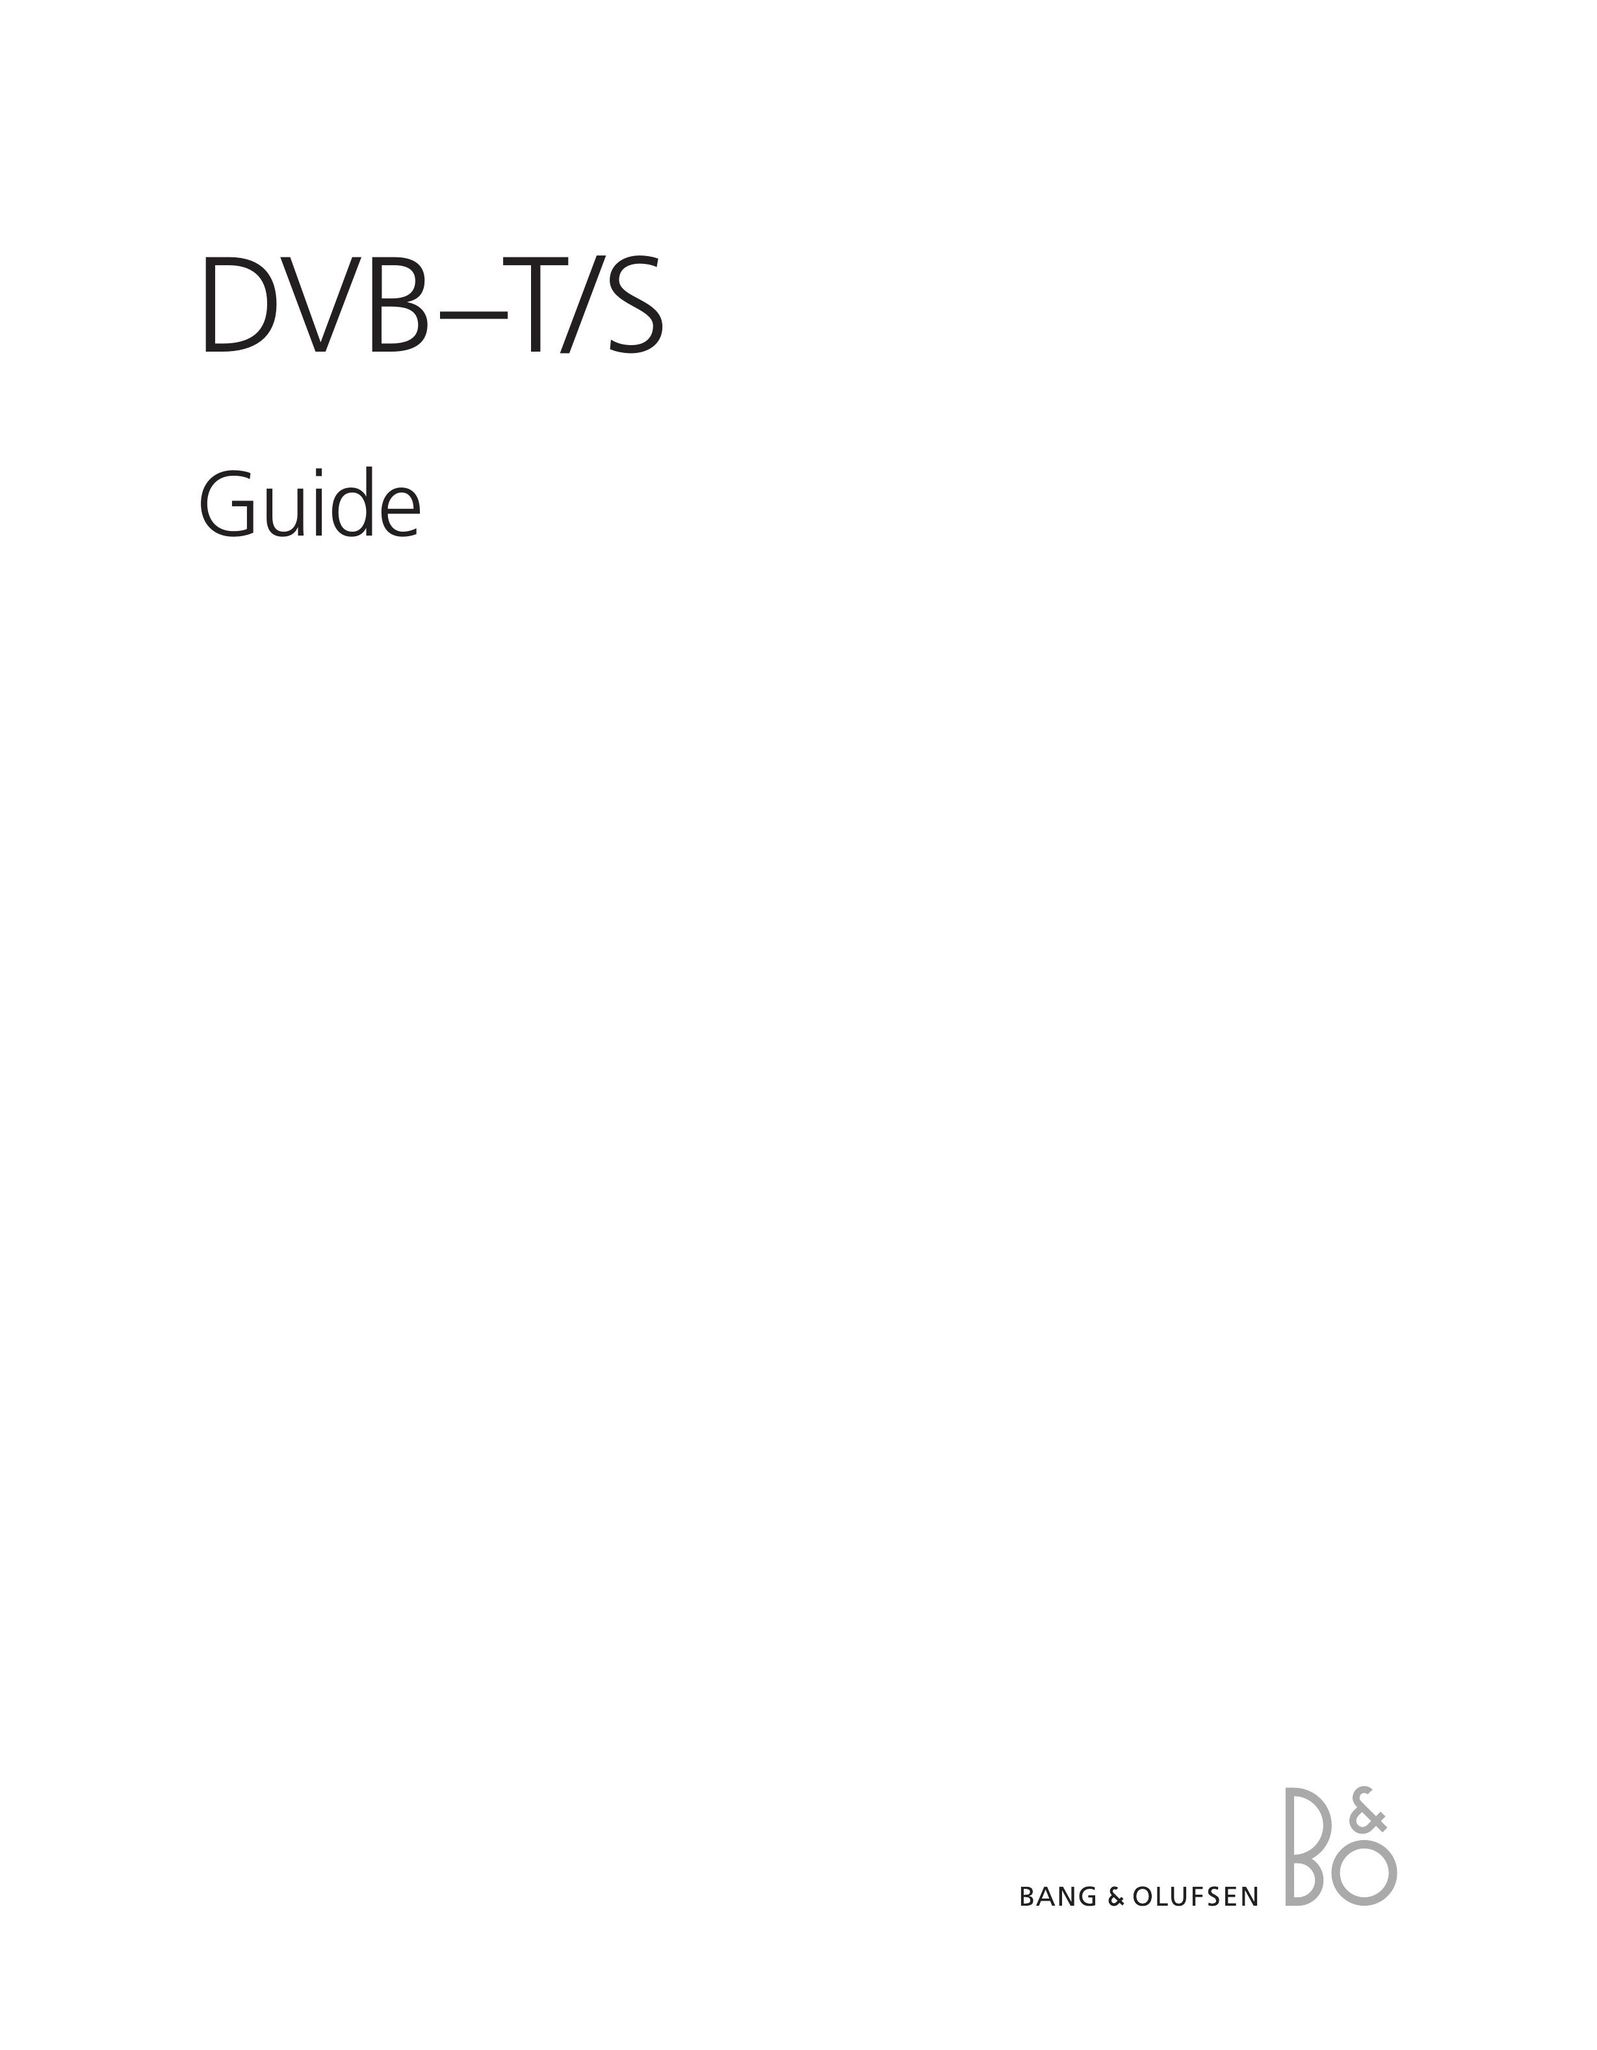 Bang & Olufsen DVBT/S Universal Remote User Manual